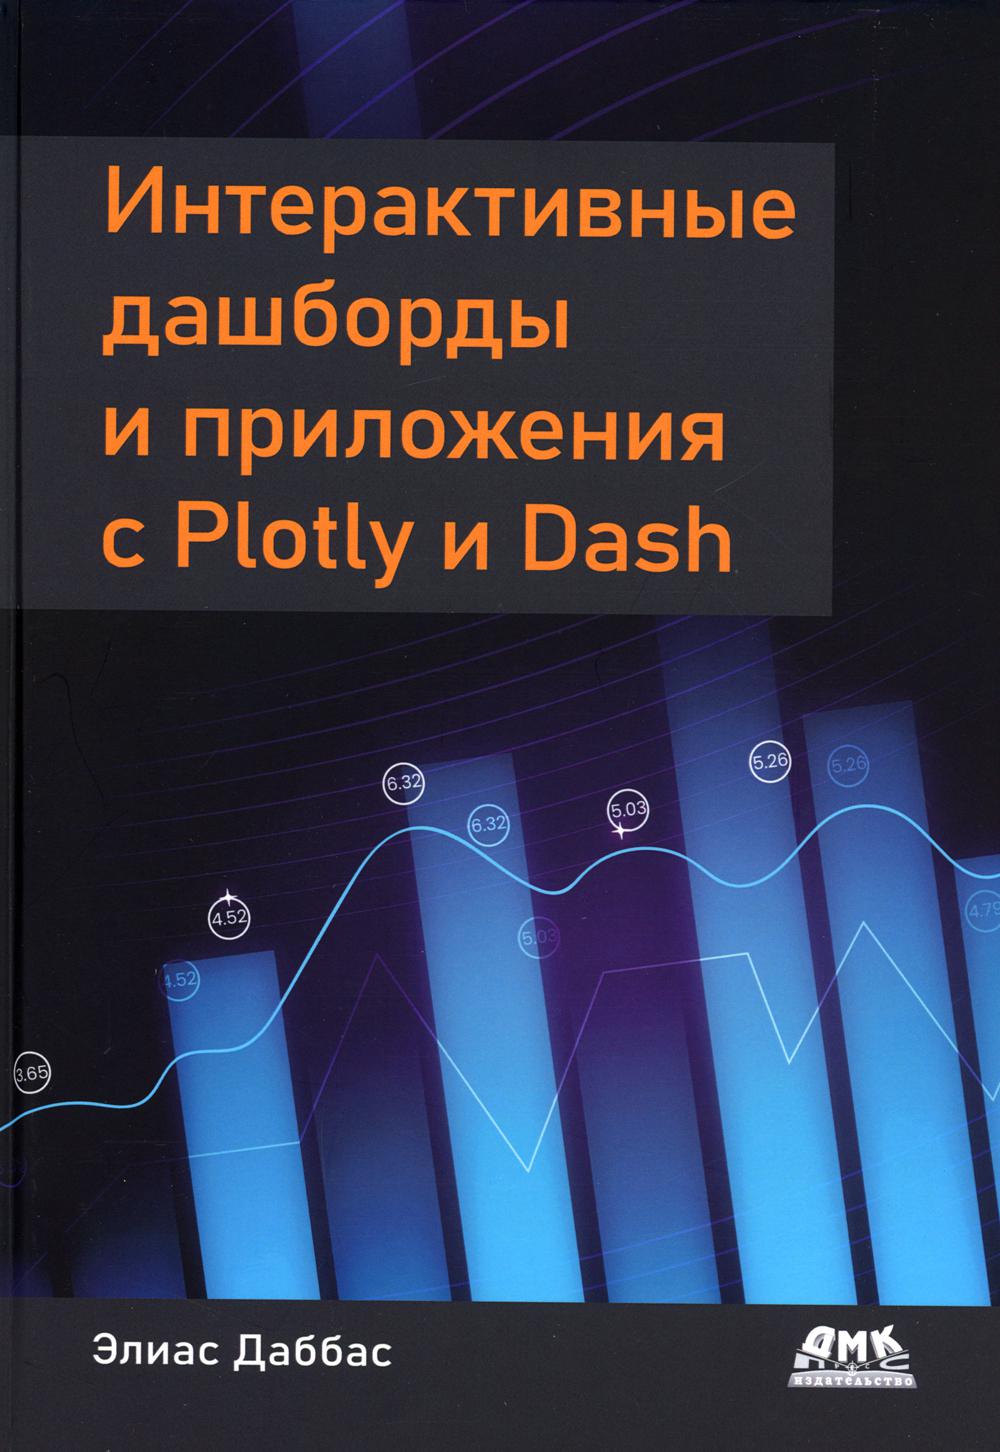      Plotly  Dash.   -  Python    -  JavaScript